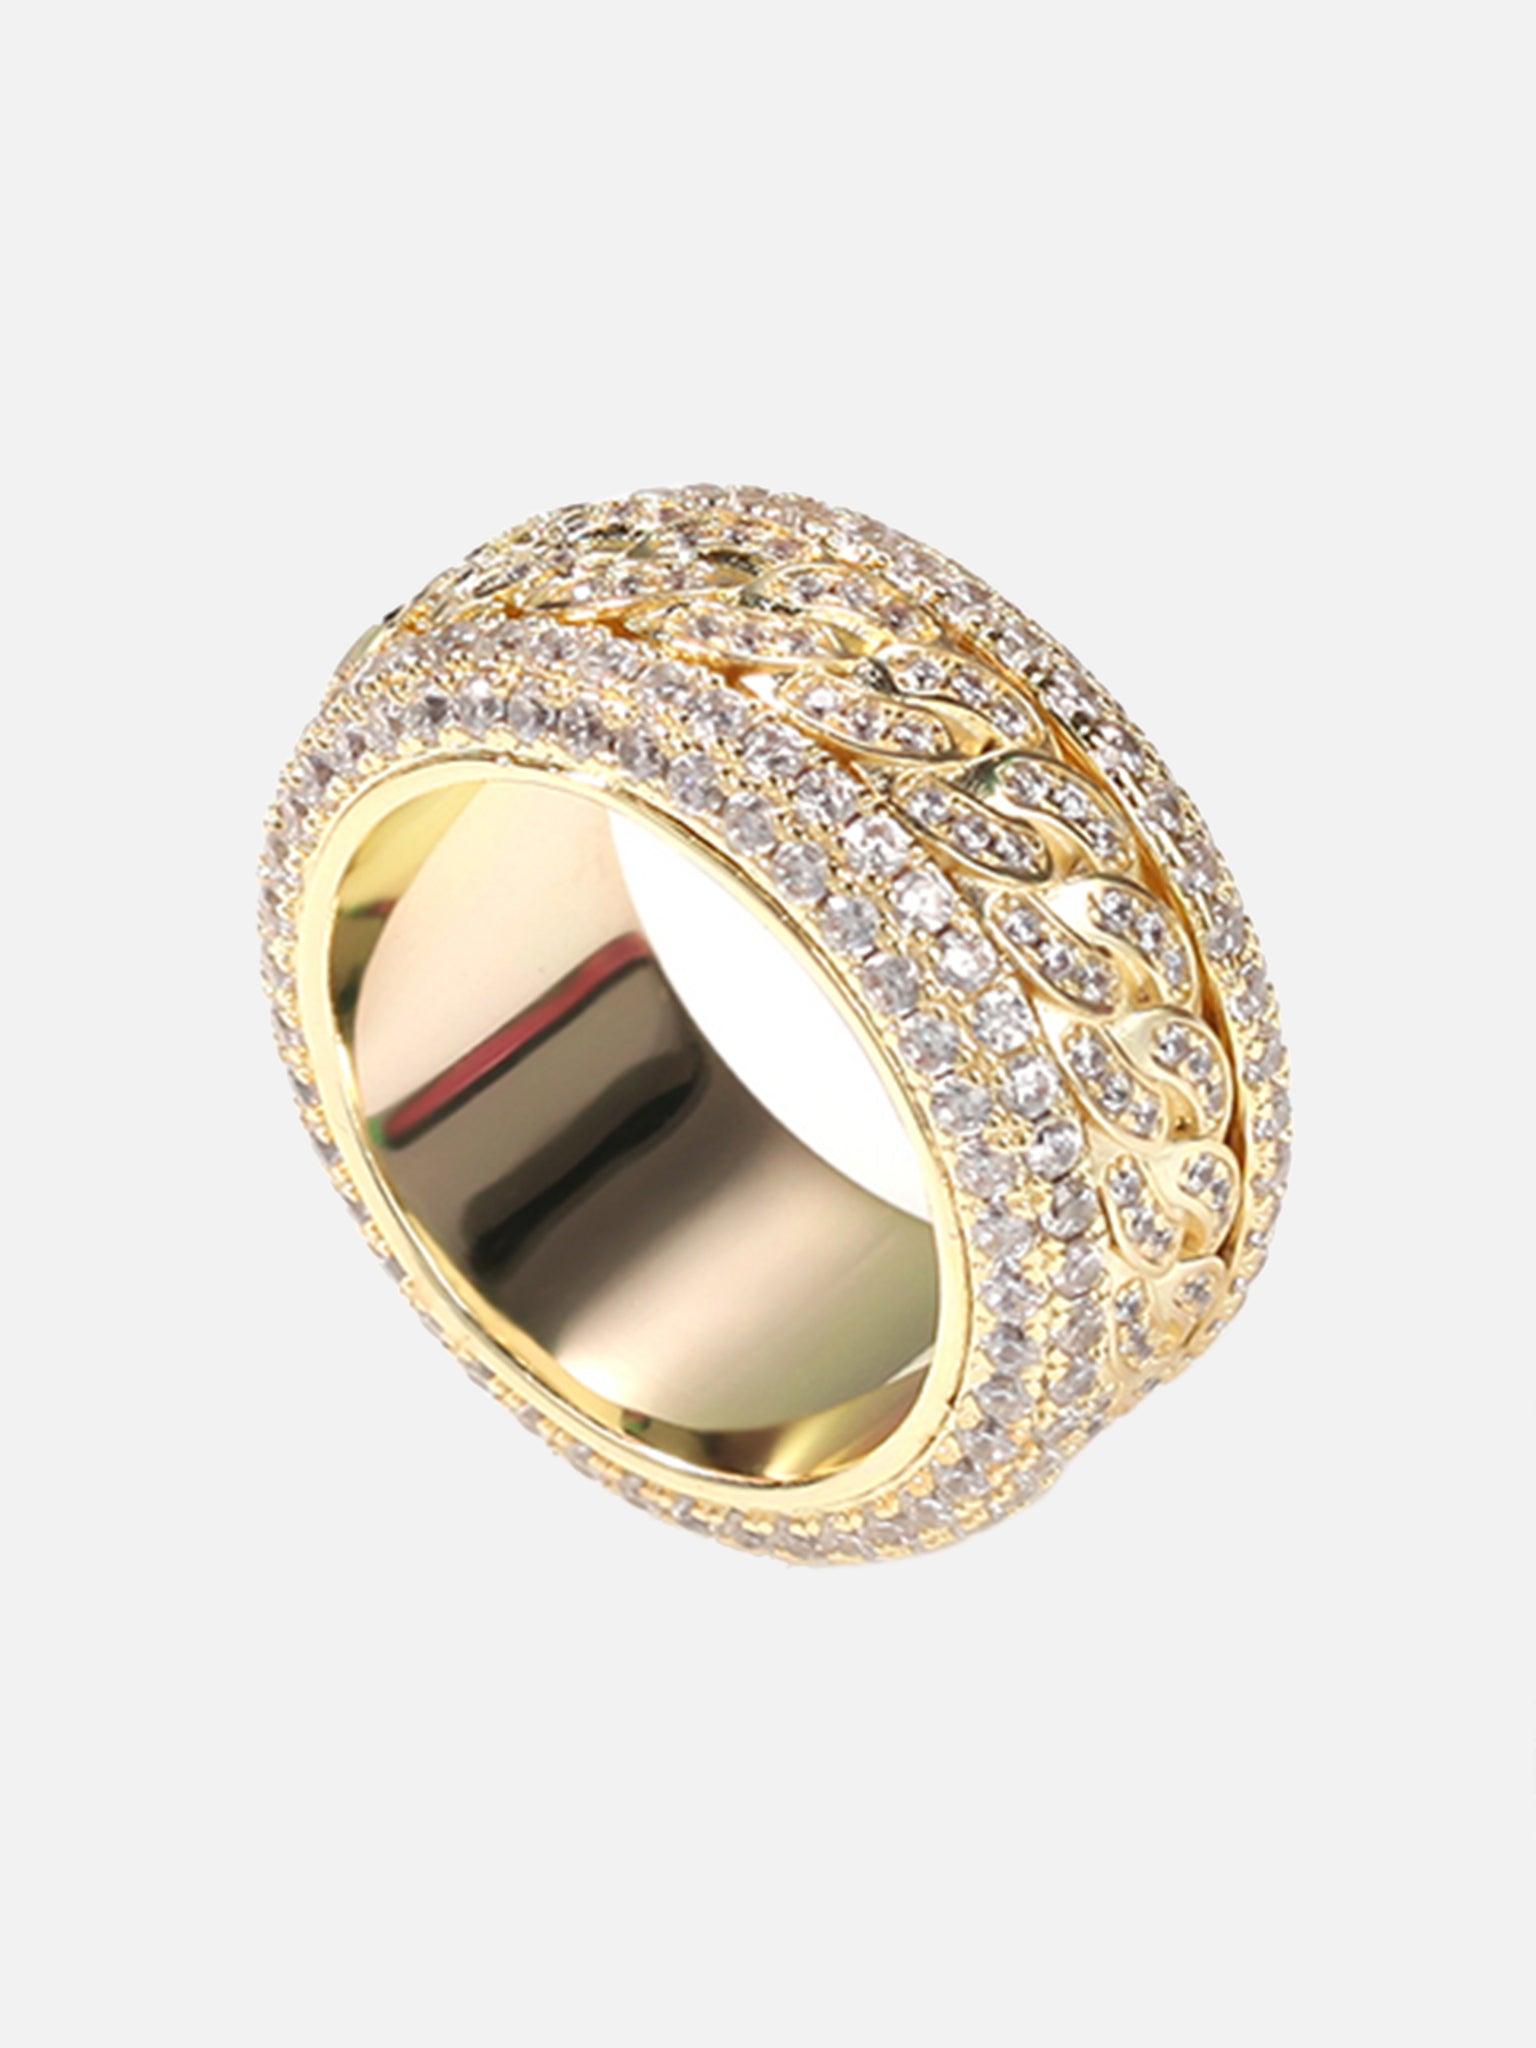 The Supermade Full Diamond Spinnable Cuban Ring